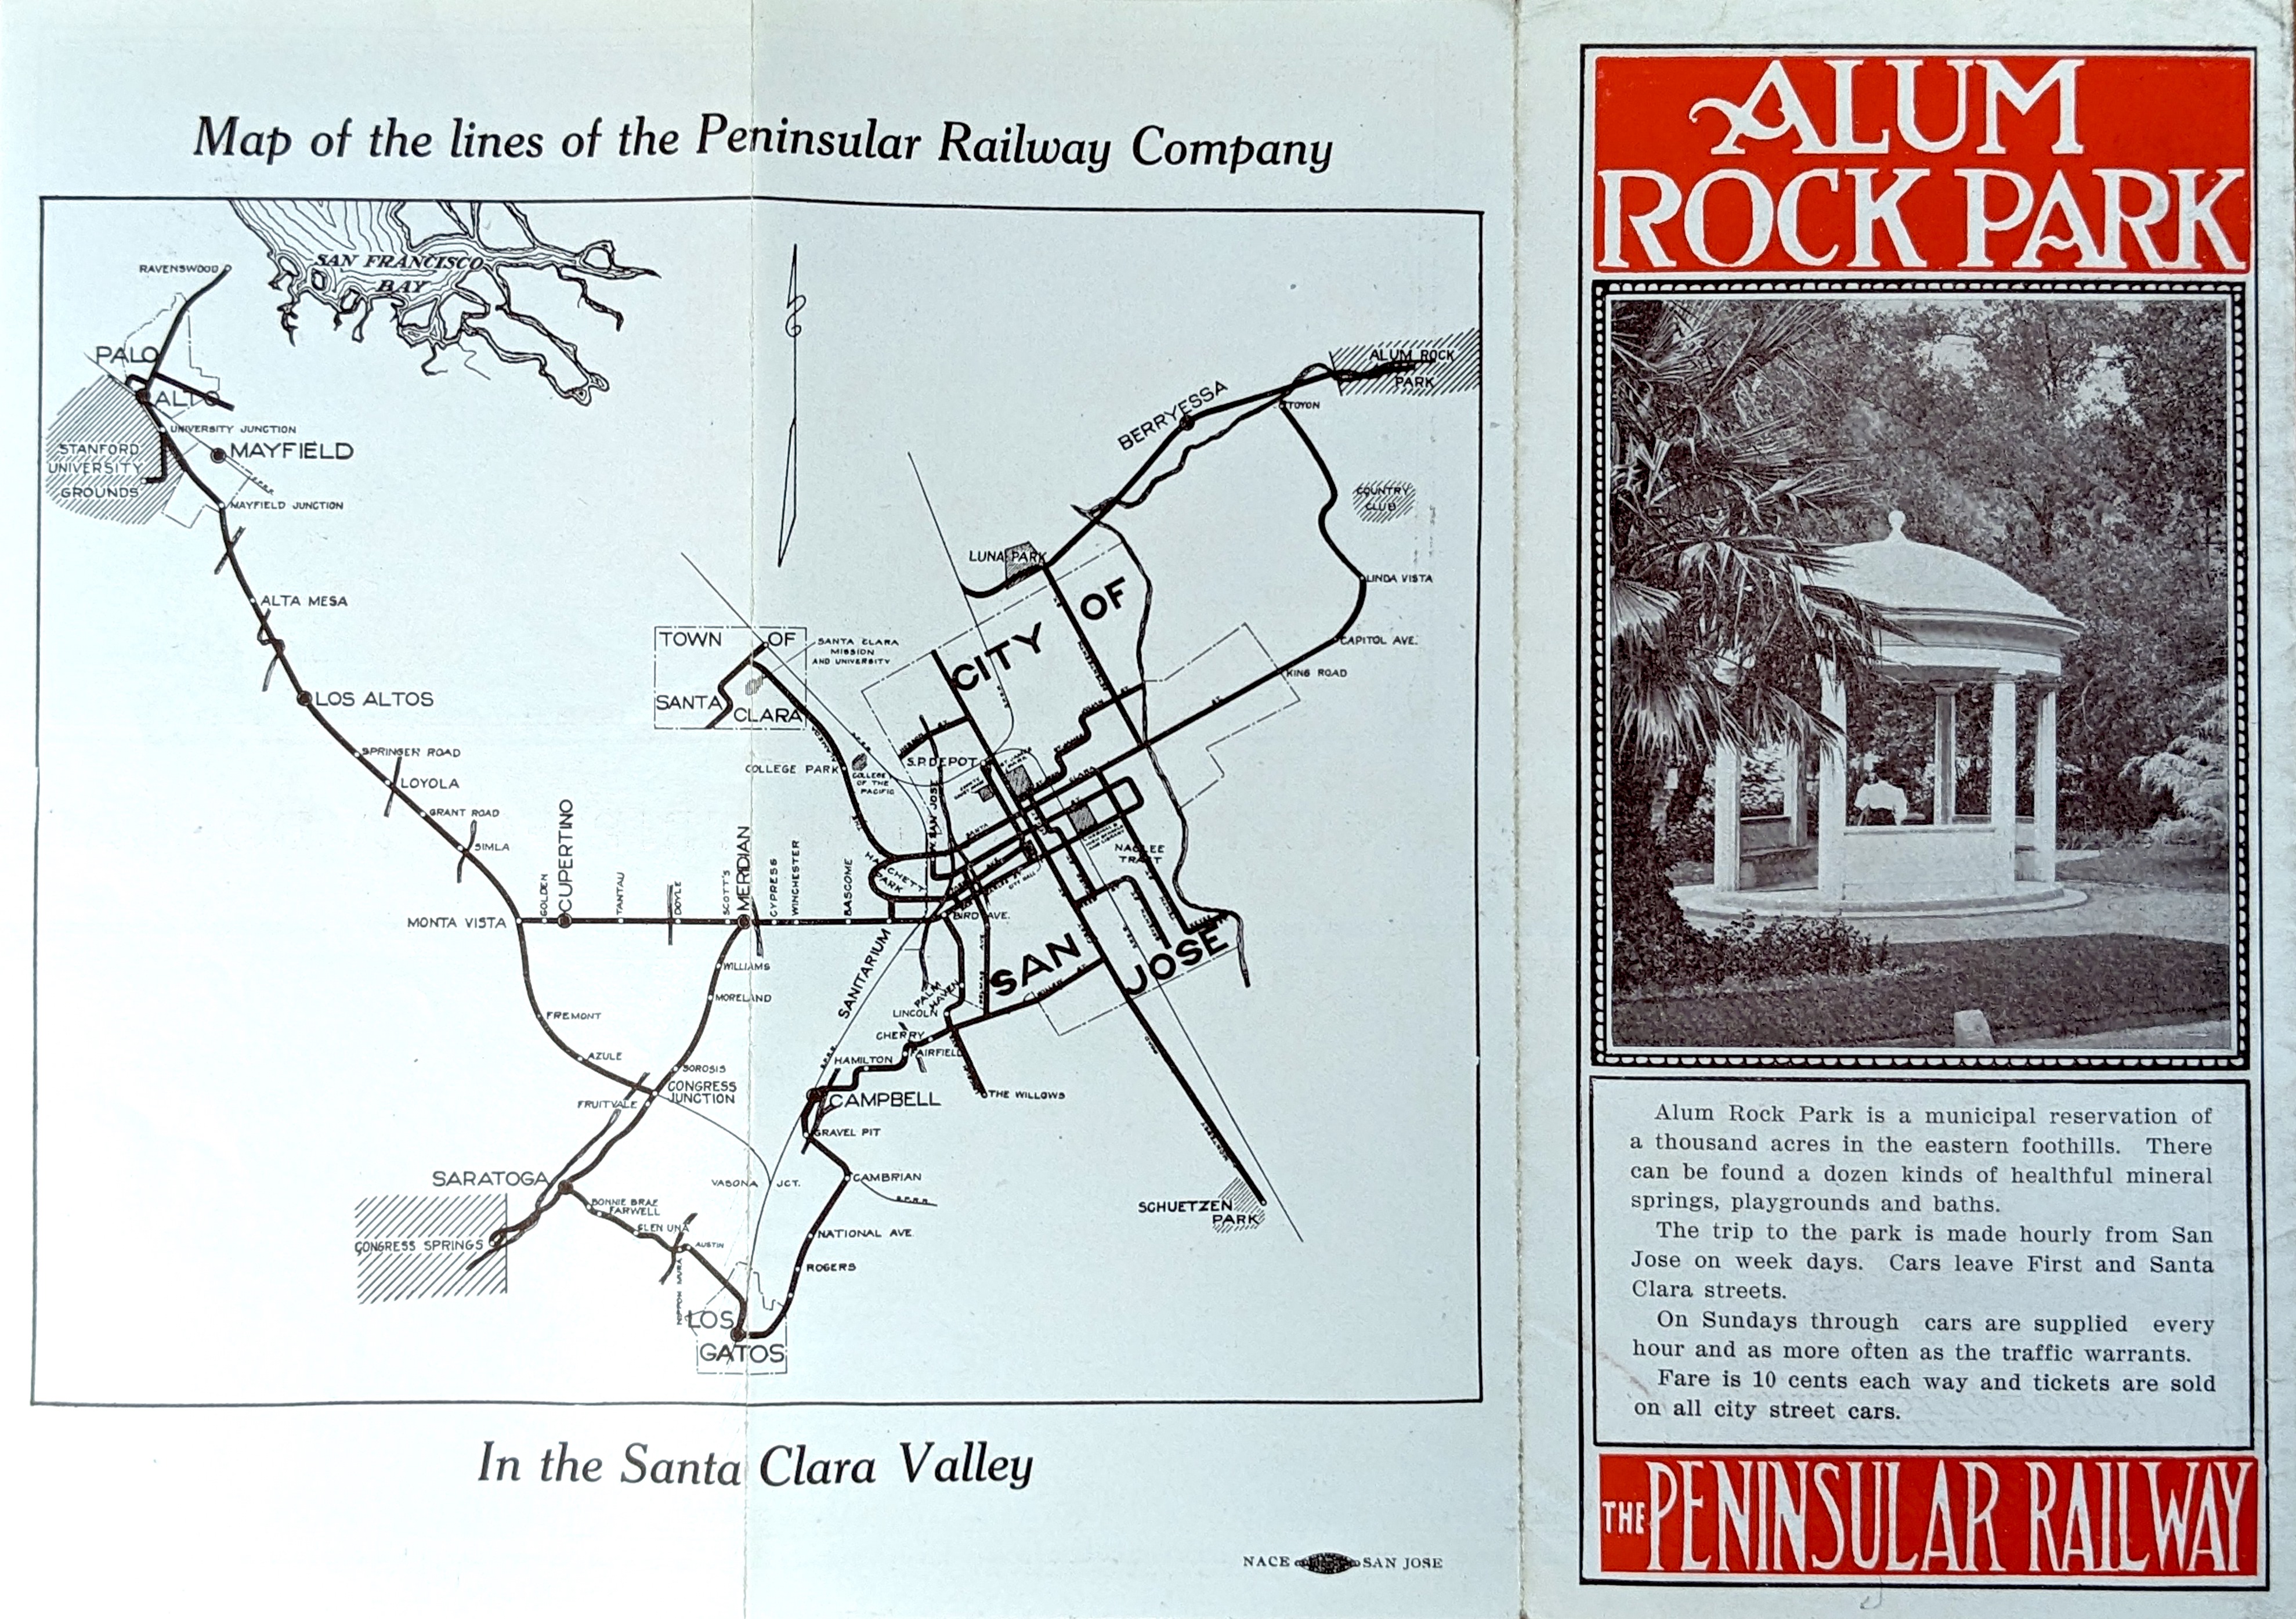 Peninsular Railway Blossom Trolley Trip brochure with map